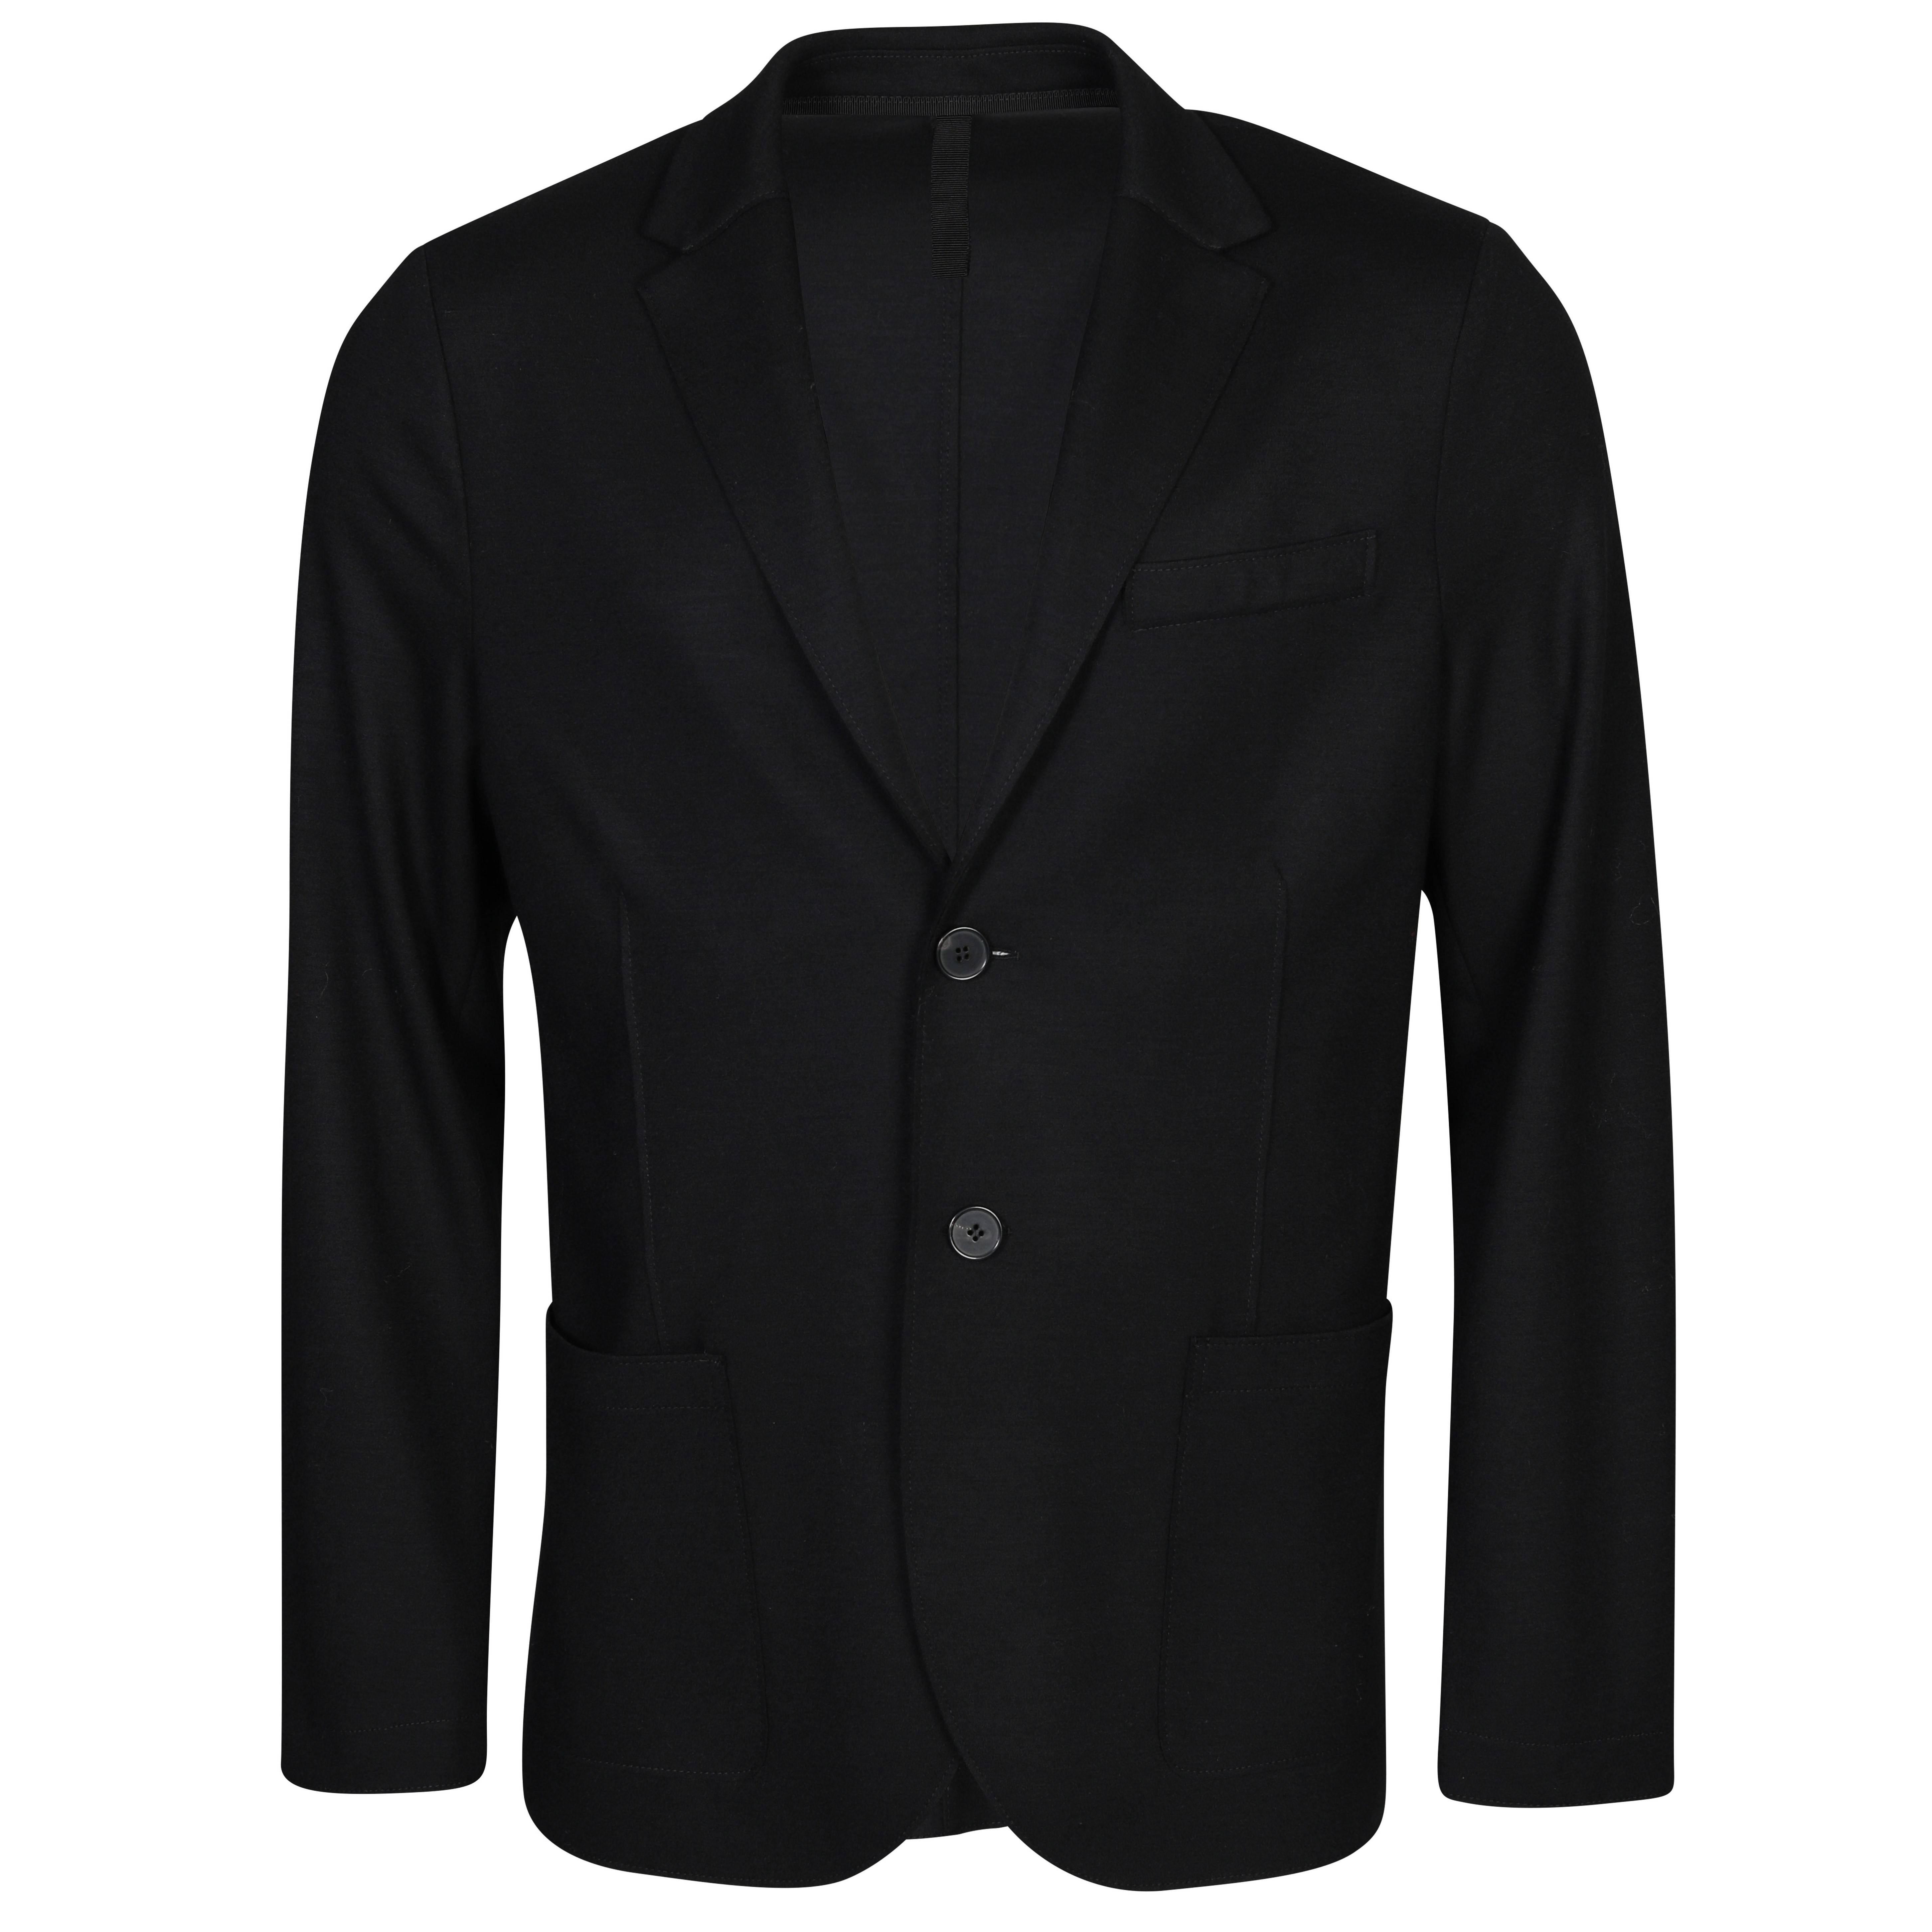 HARRIS WHARF Superfine Merino Jacket in Black